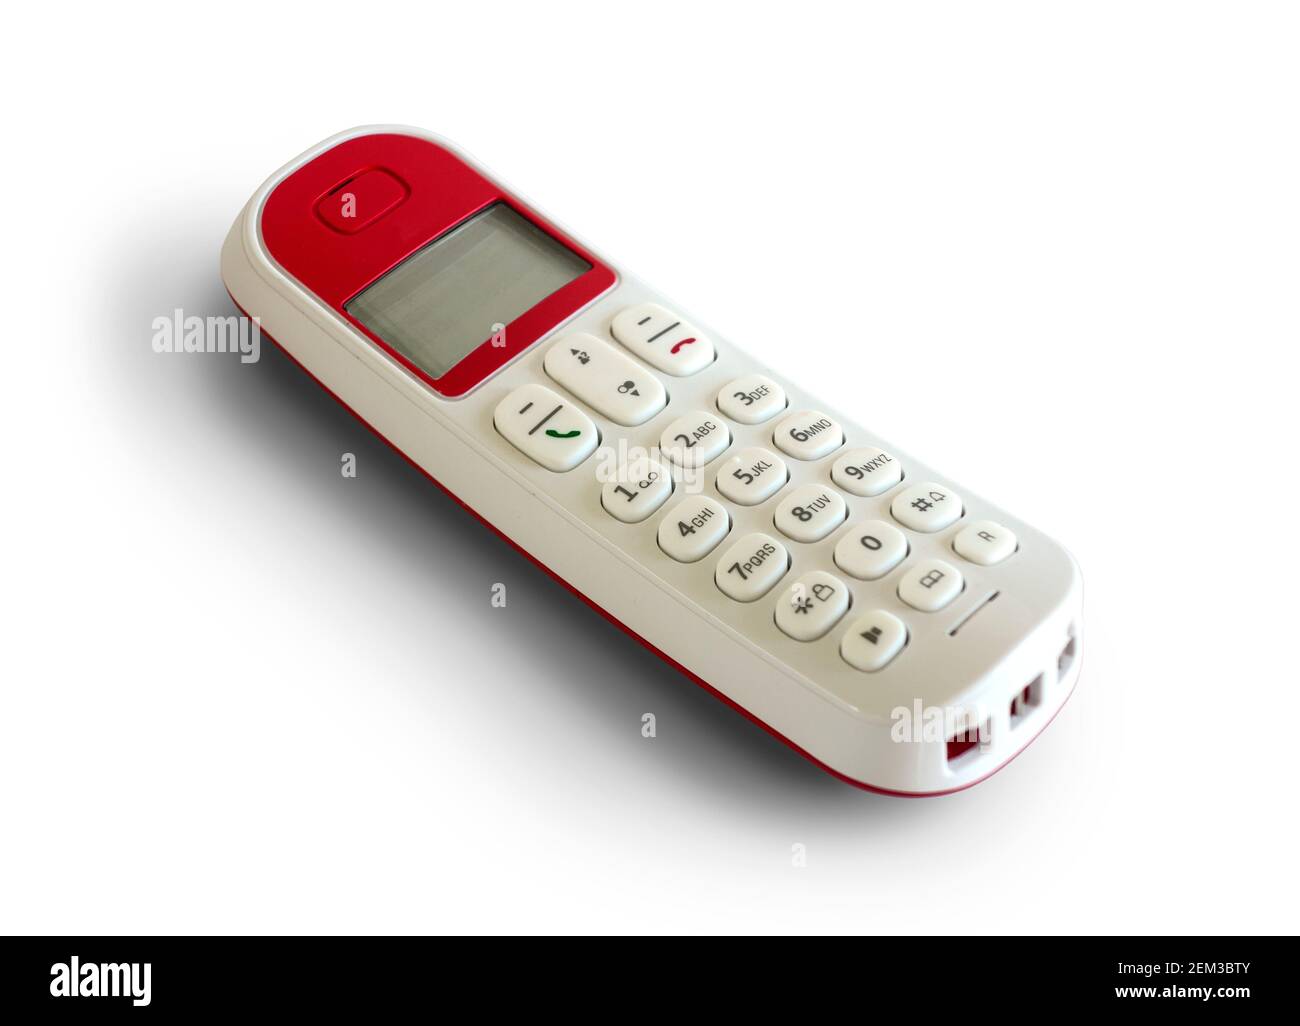 Teléfono dect blanco rojo aislado sobre fondo blanco Foto de stock